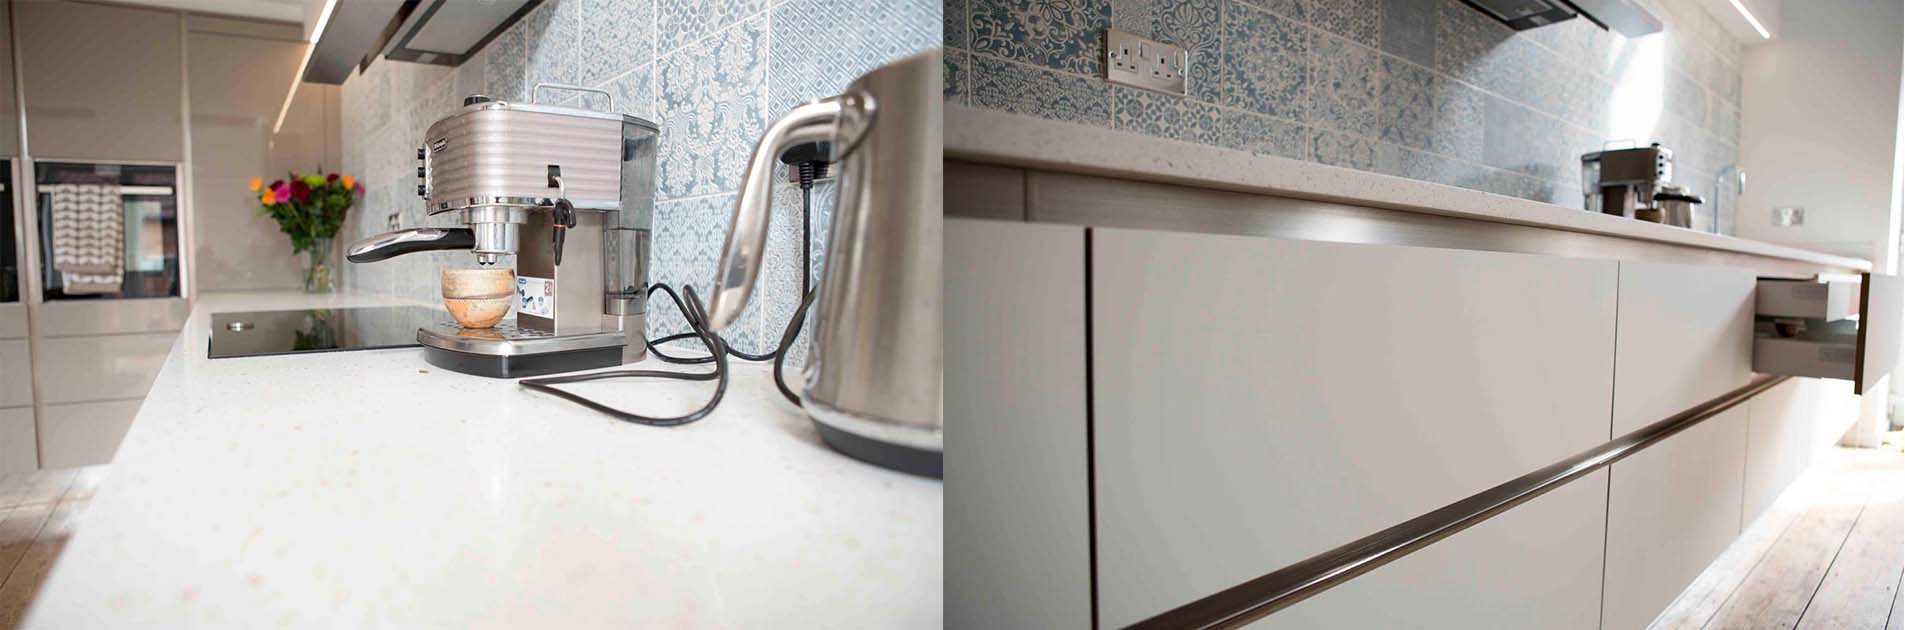 Kitchen case study: hob on white worktop and sleek handle-less kitchen drawer units